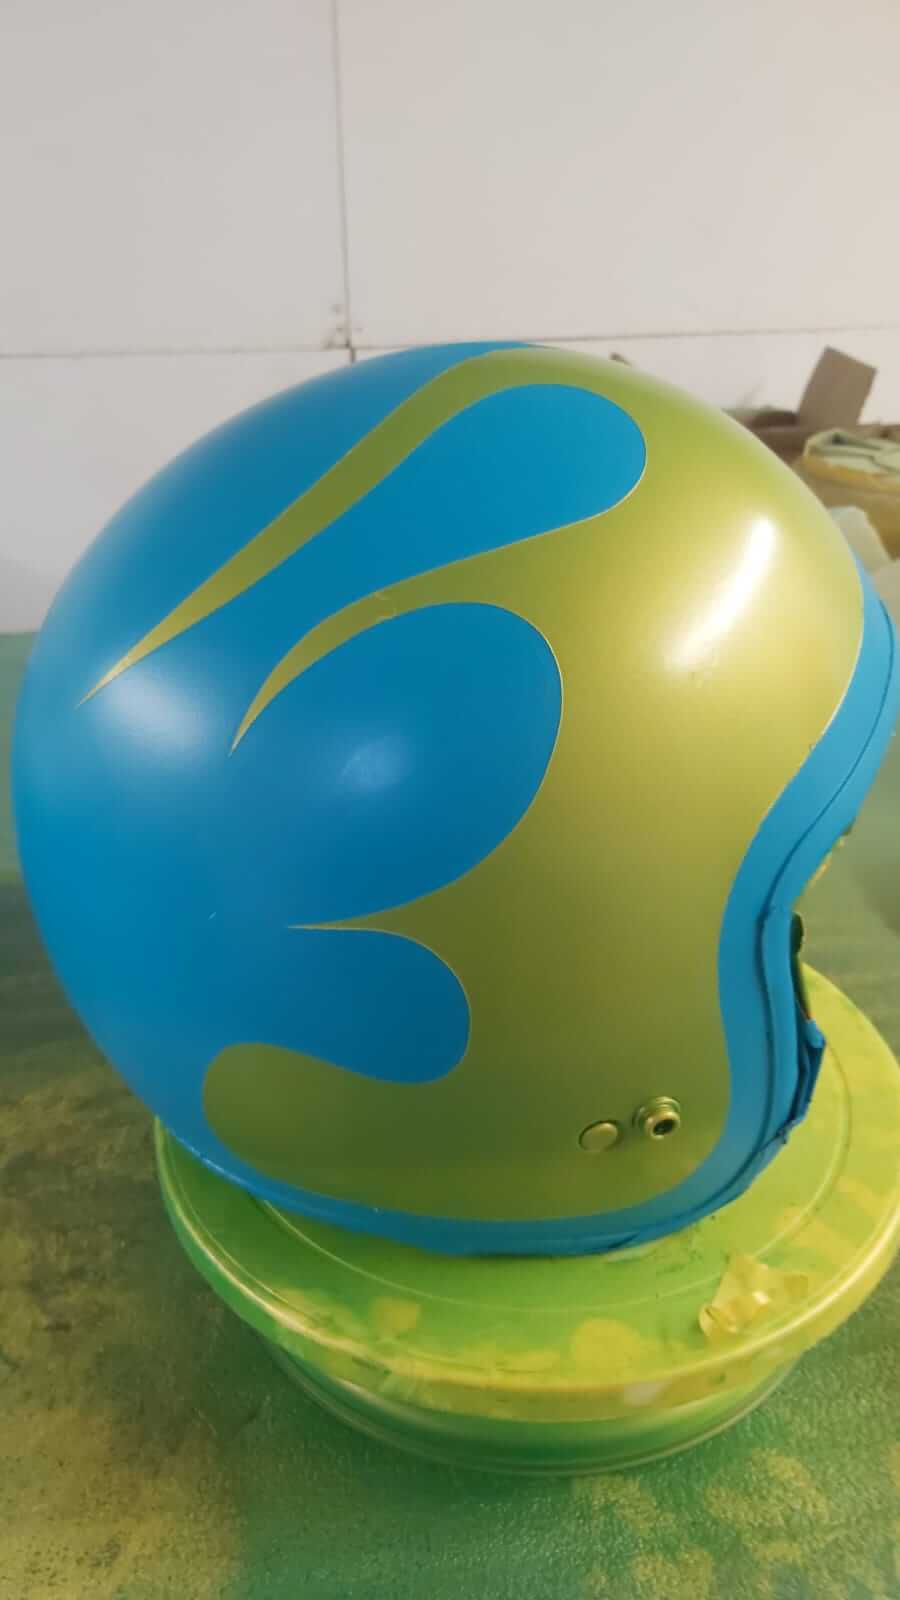 design added to helmet